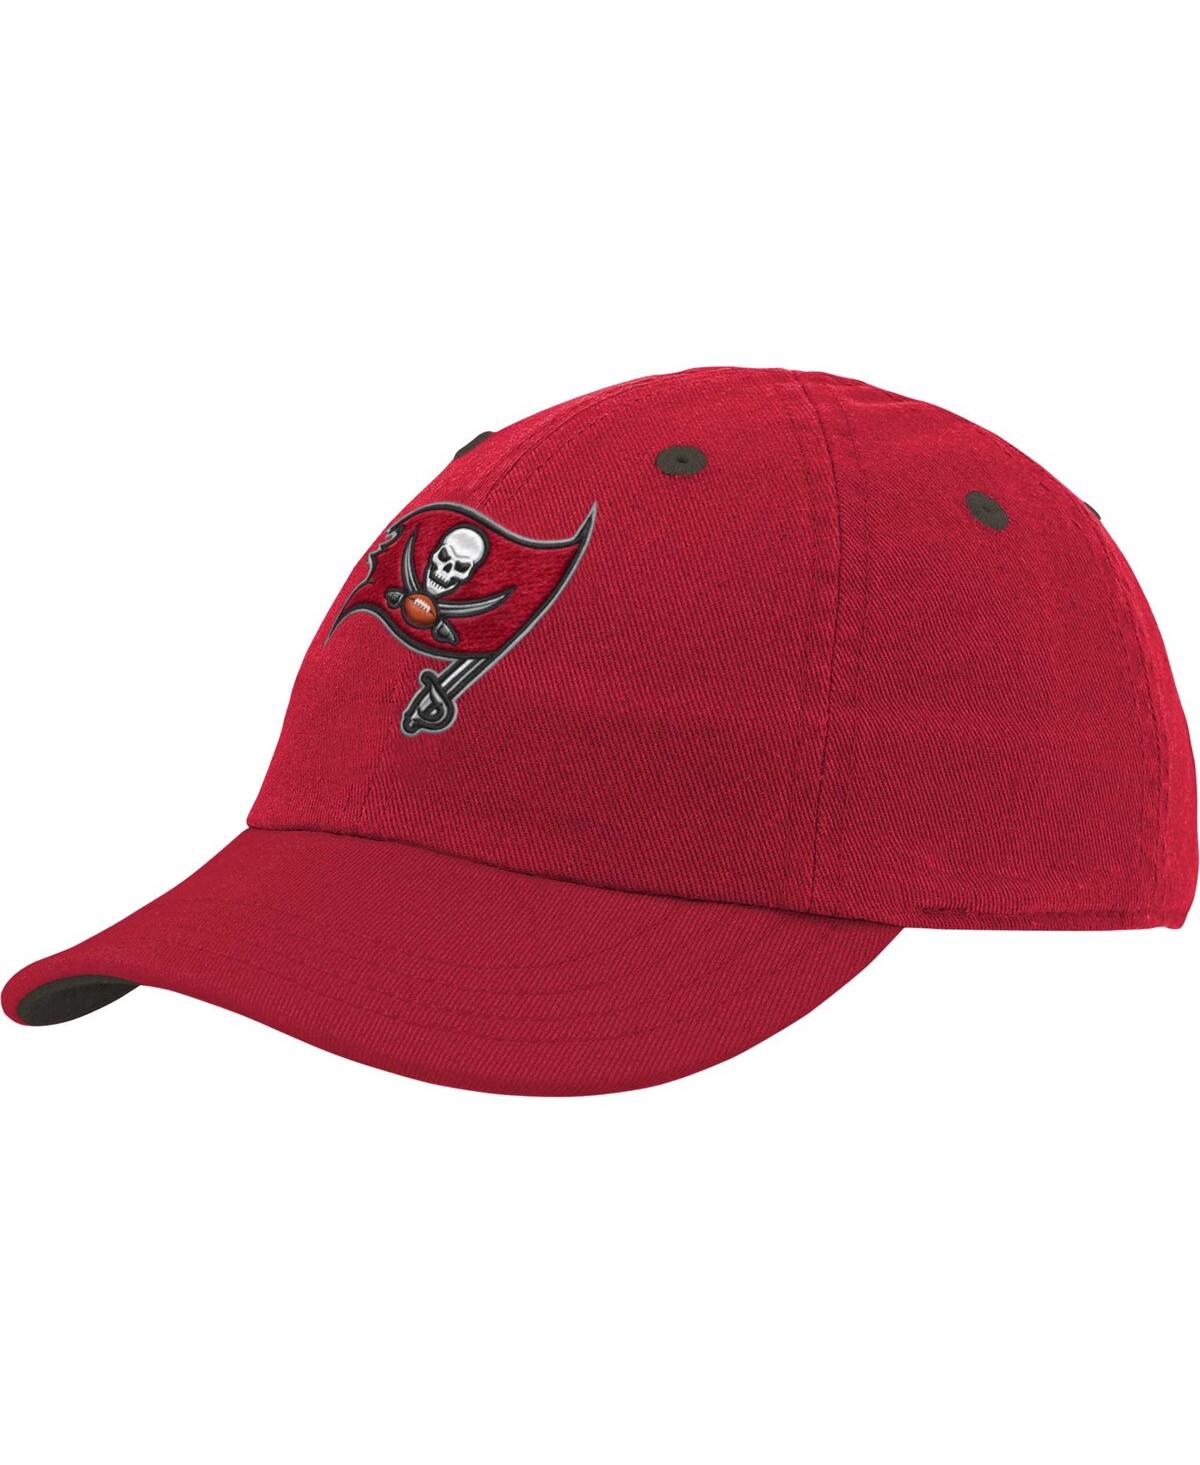 Outerstuff Babies' Newborn Infant Unisex Red Tampa Bay Buccaneers Slouch Flex Hat